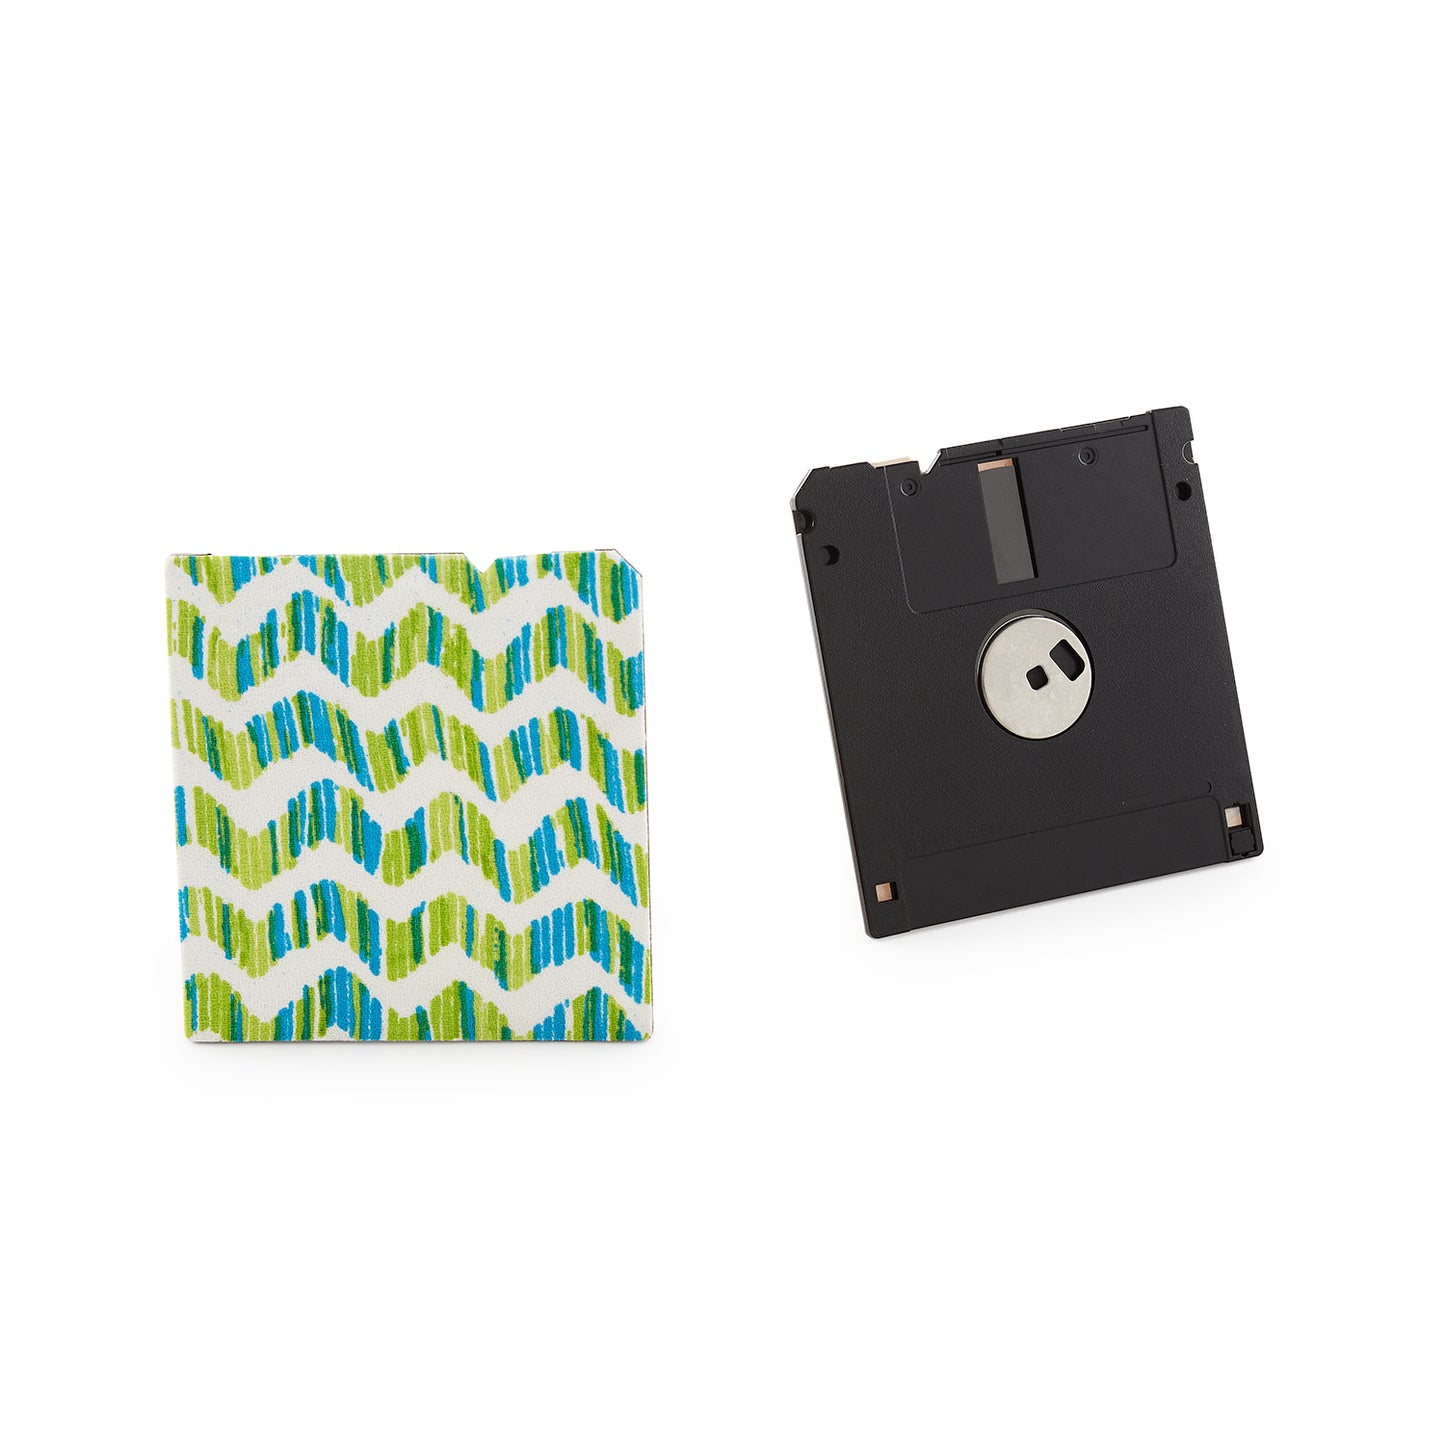 Lime Green, Cerulean Blue & White - Floppy Disk Coaster Set of 2